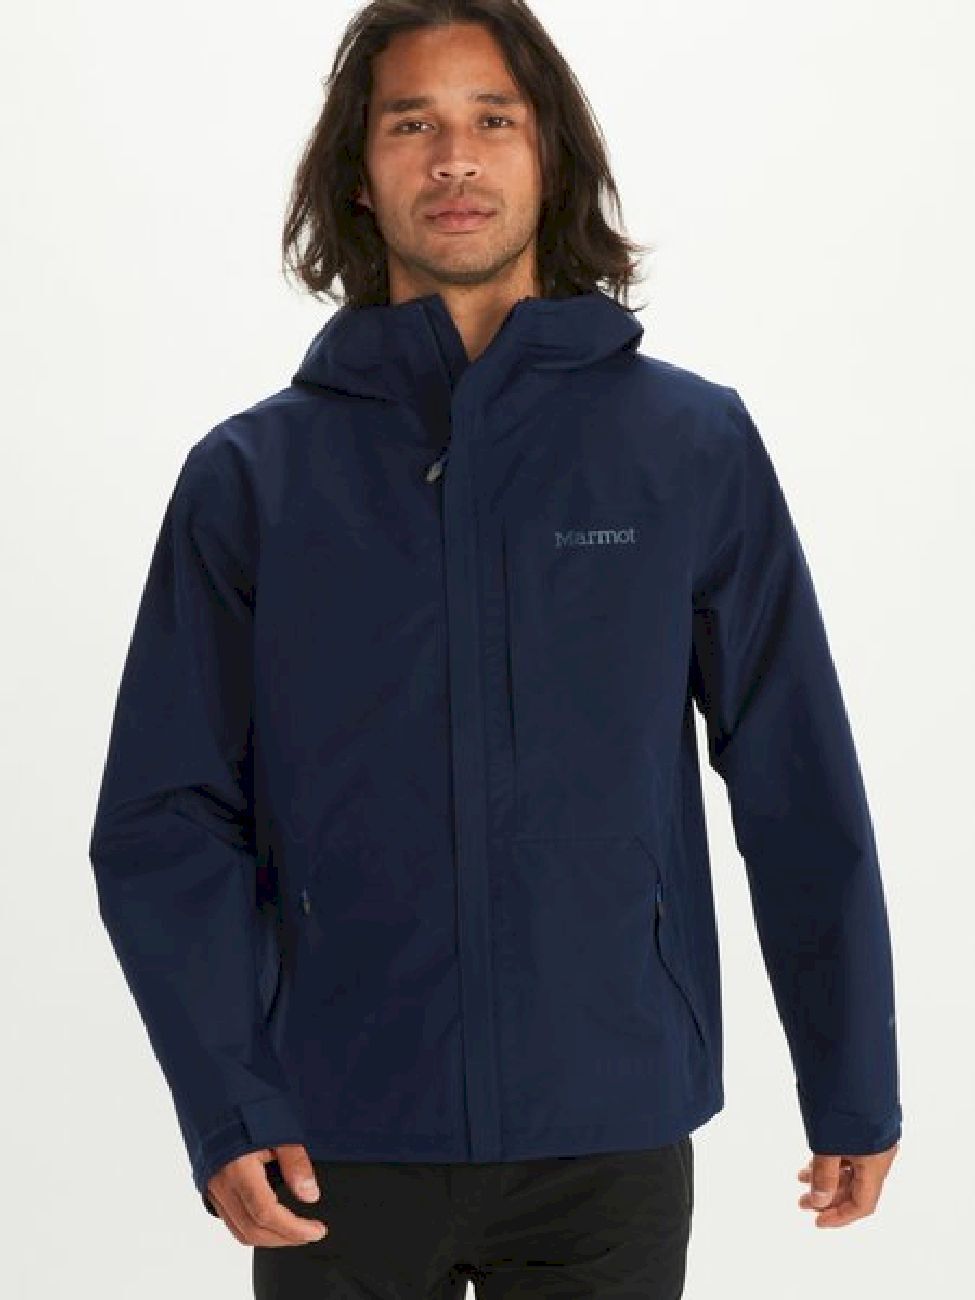 Marmot Minimalist Jacket - Waterproof jacket - Men's